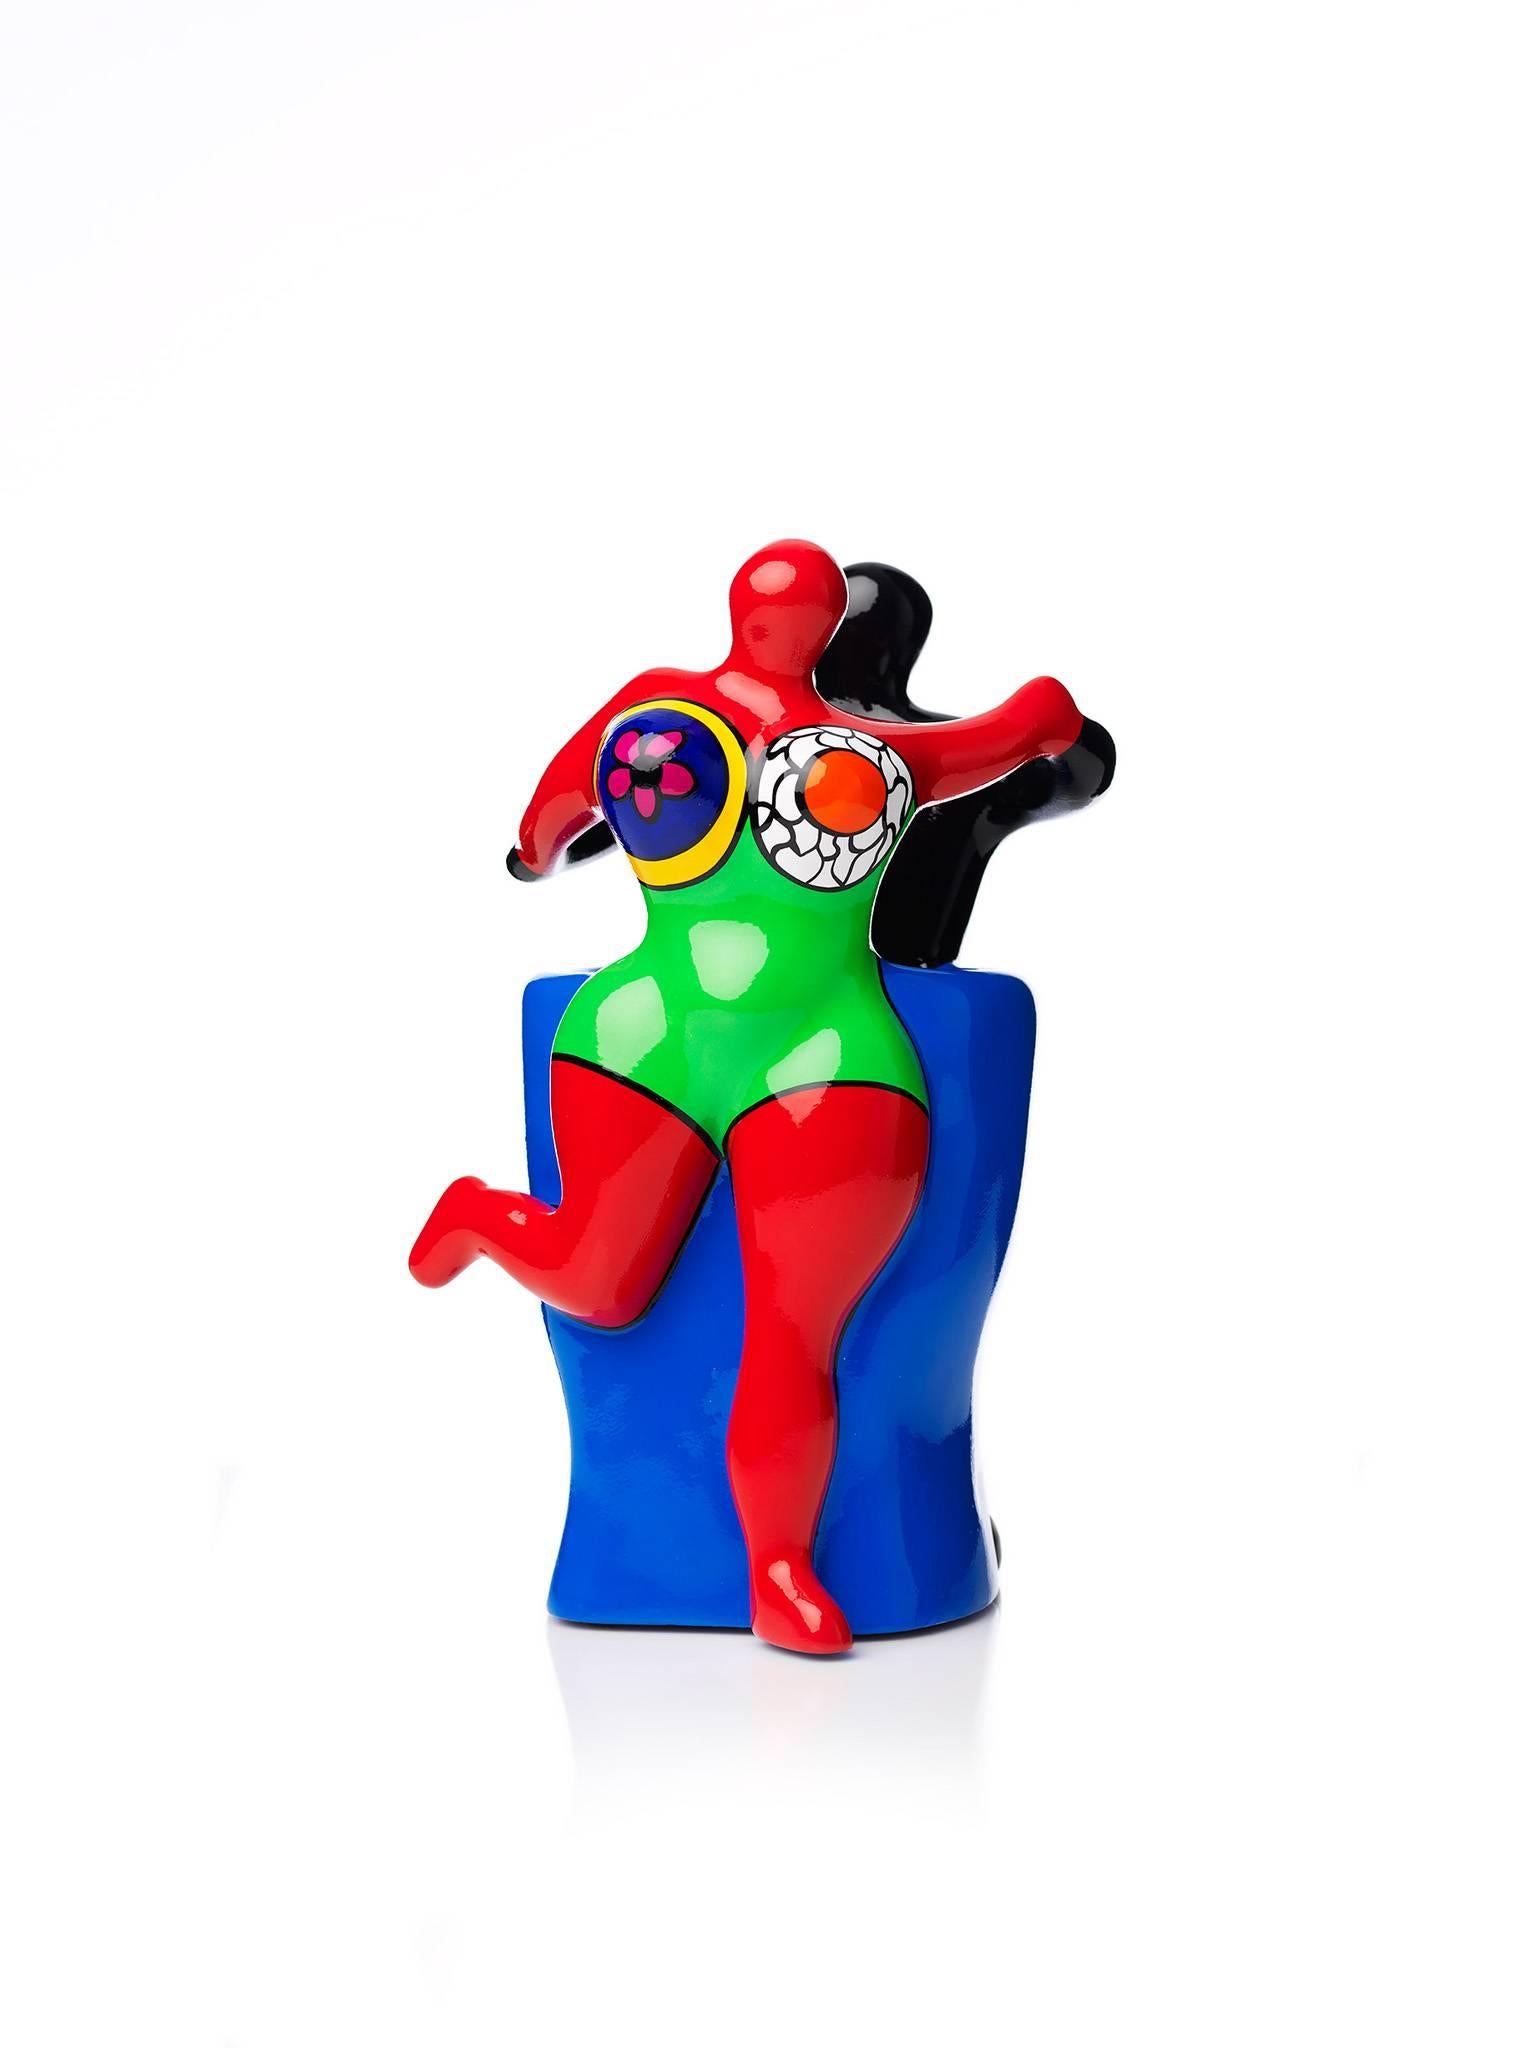 The Couple - Contemporary Sculpture by Niki de Saint Phalle